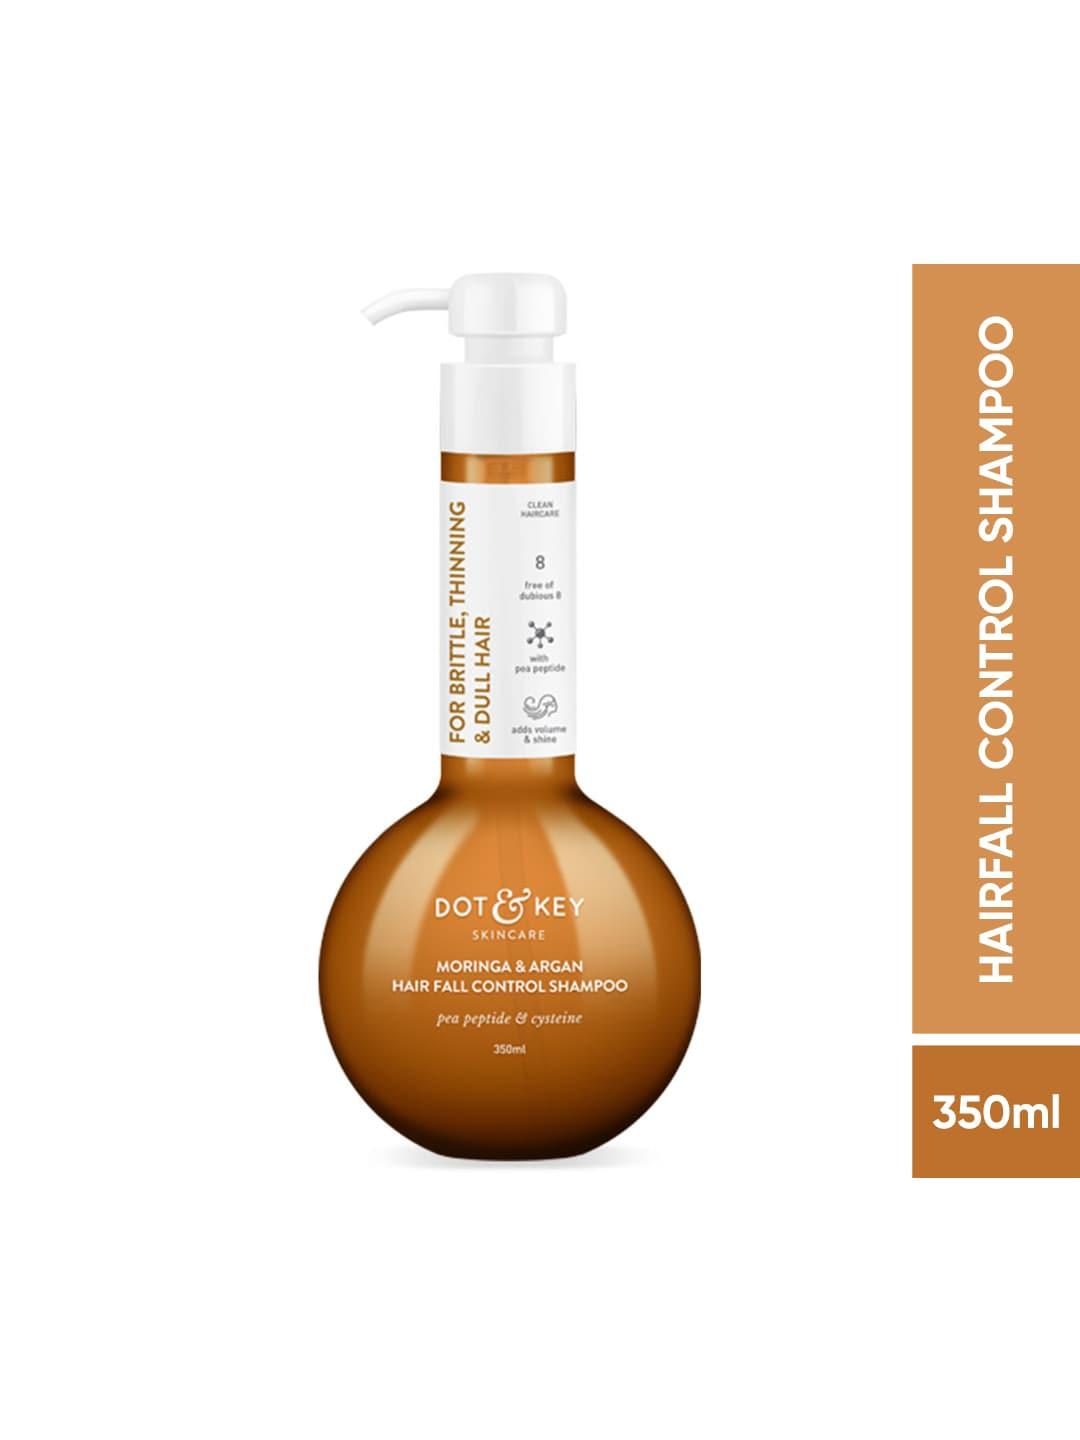 DOT & KEY Argan Oil Hairfall Control Shampoo with Moringa & Keratin for Dry Hair - 350 ml